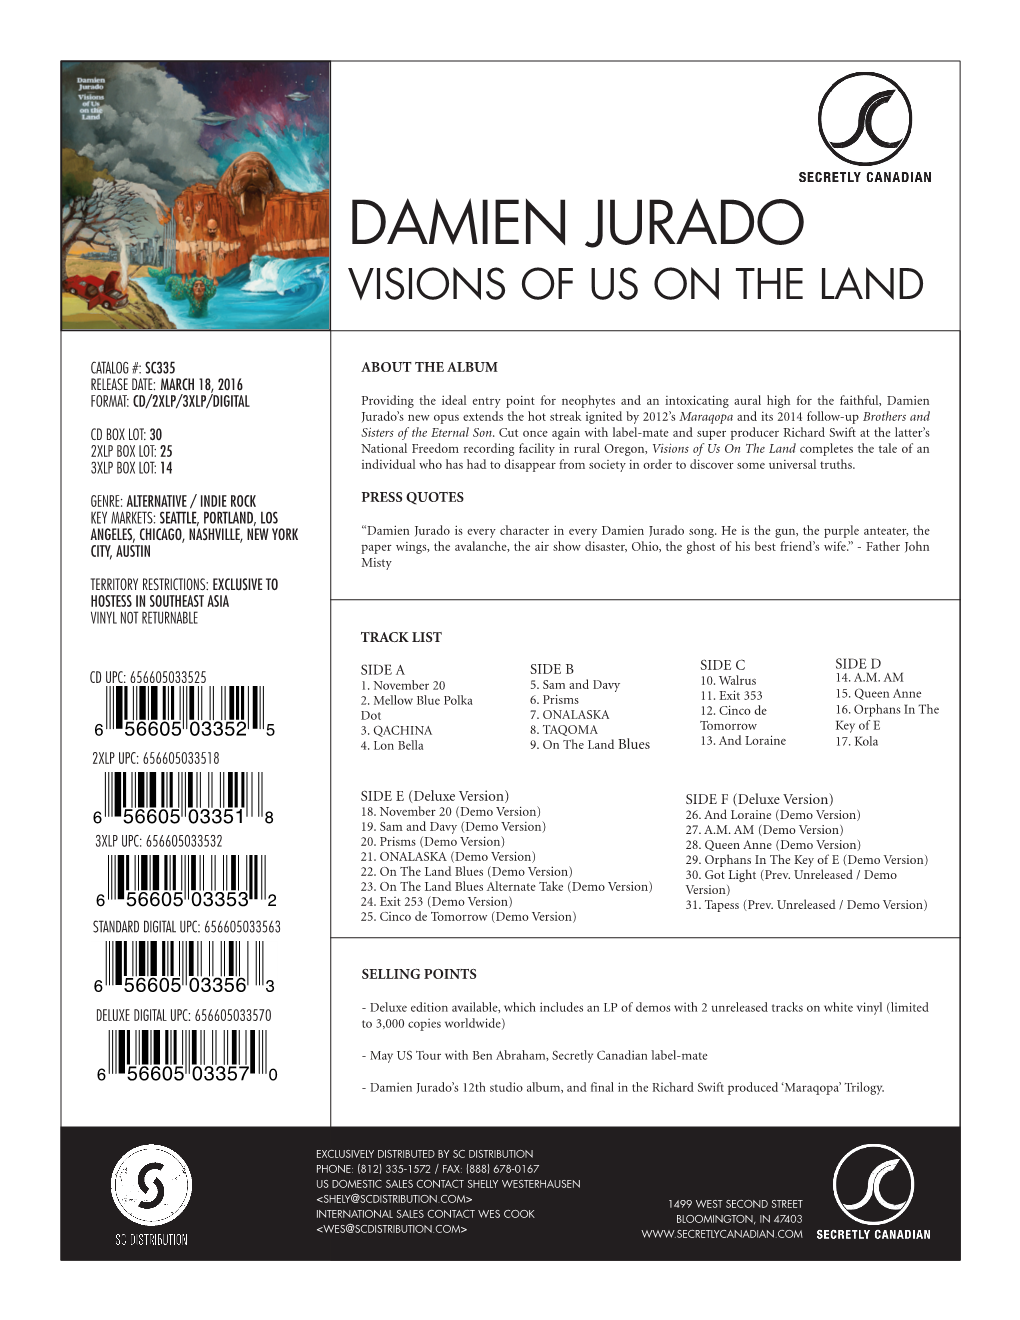 Damien Jurado Visions of Us on the Land